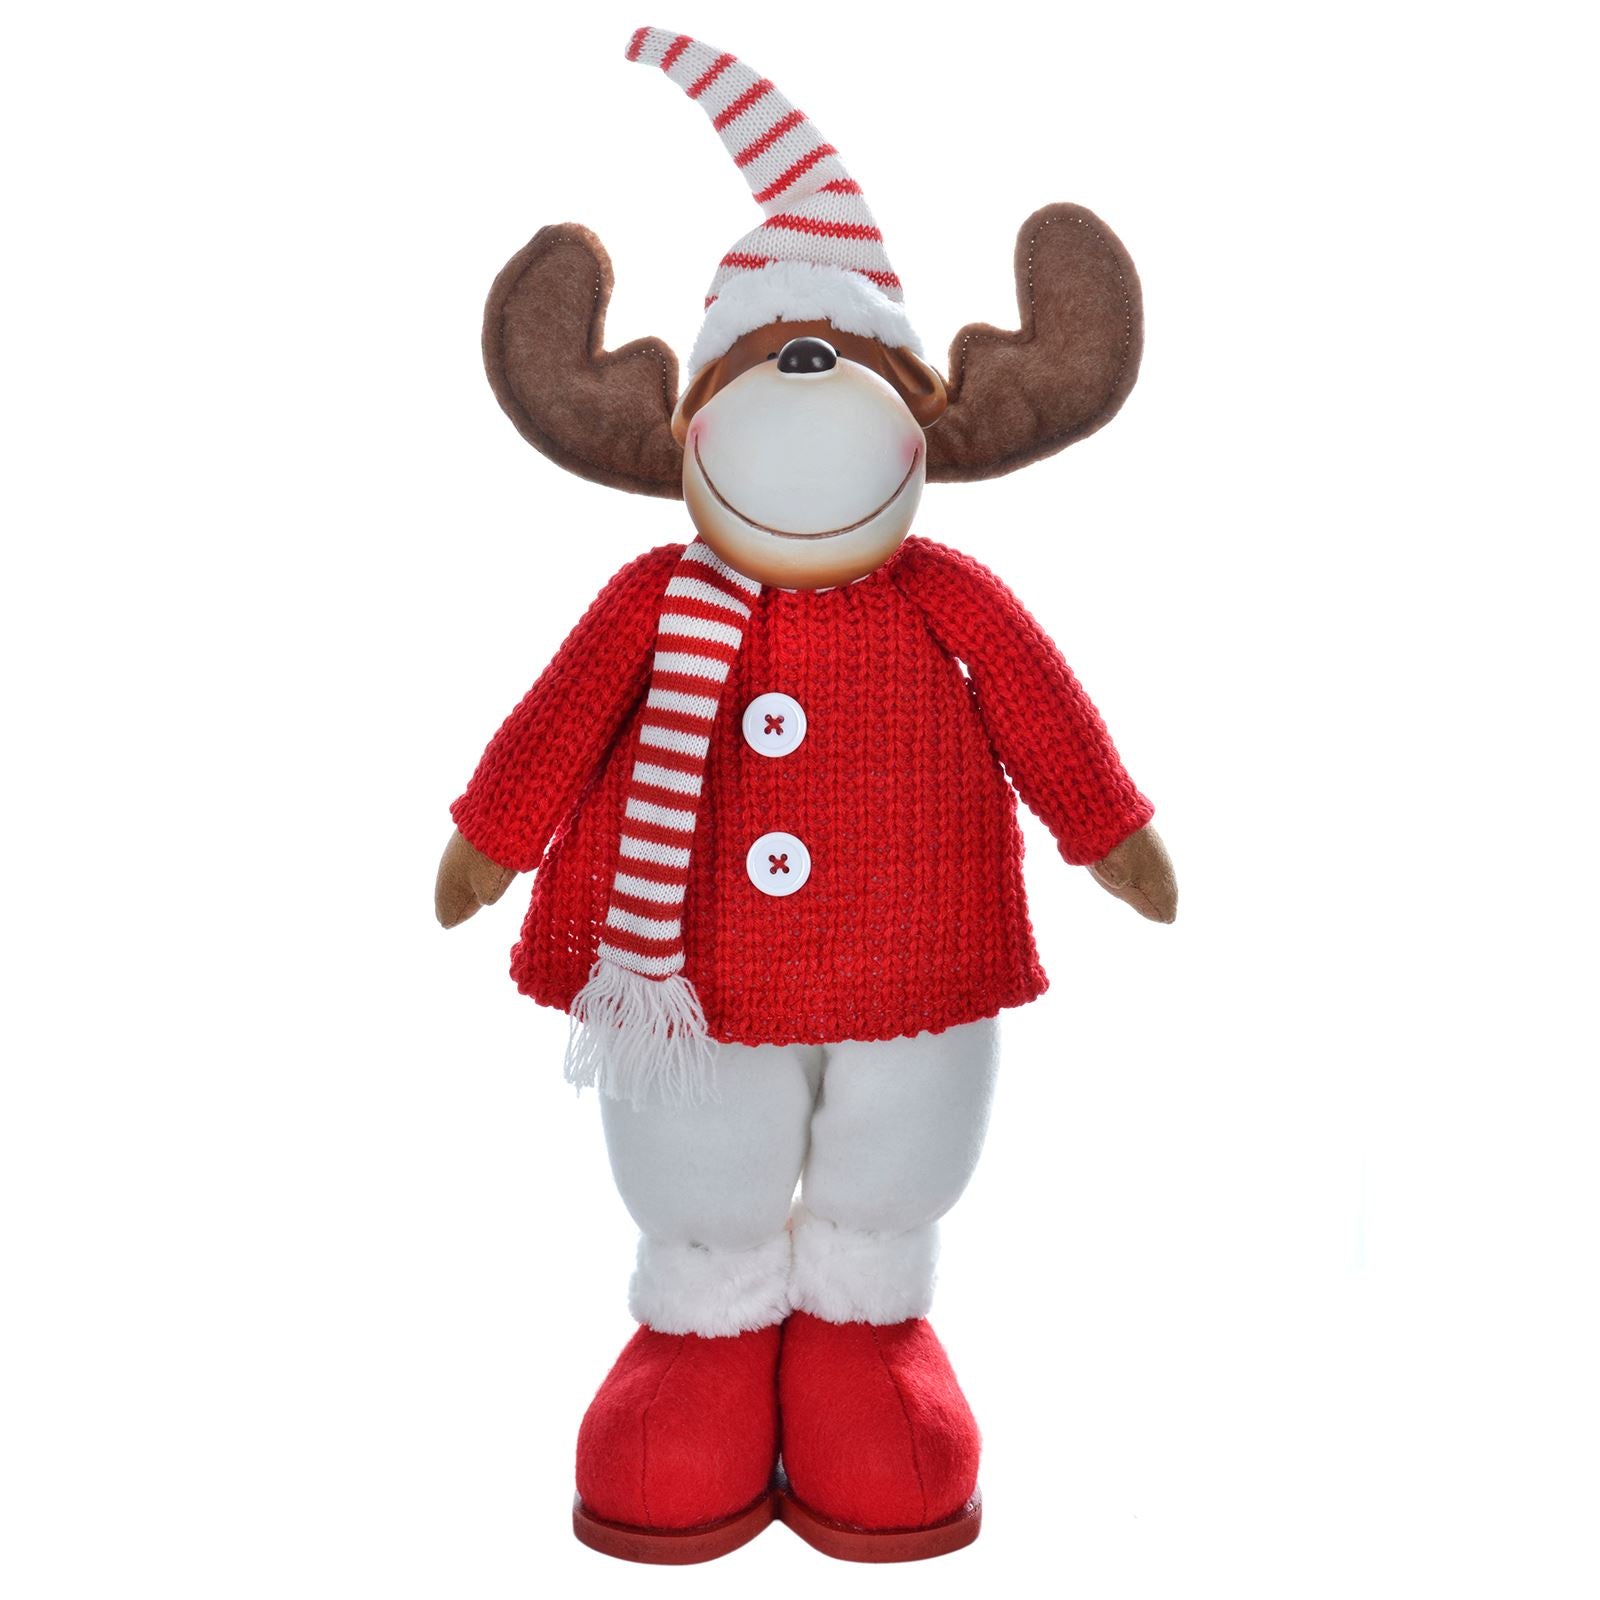 Mr Crimbo Plush Reindeer Figure Novelty Decoration Red White - MrCrimbo.co.uk -XS5139 - Reindeer Fleece Trousers